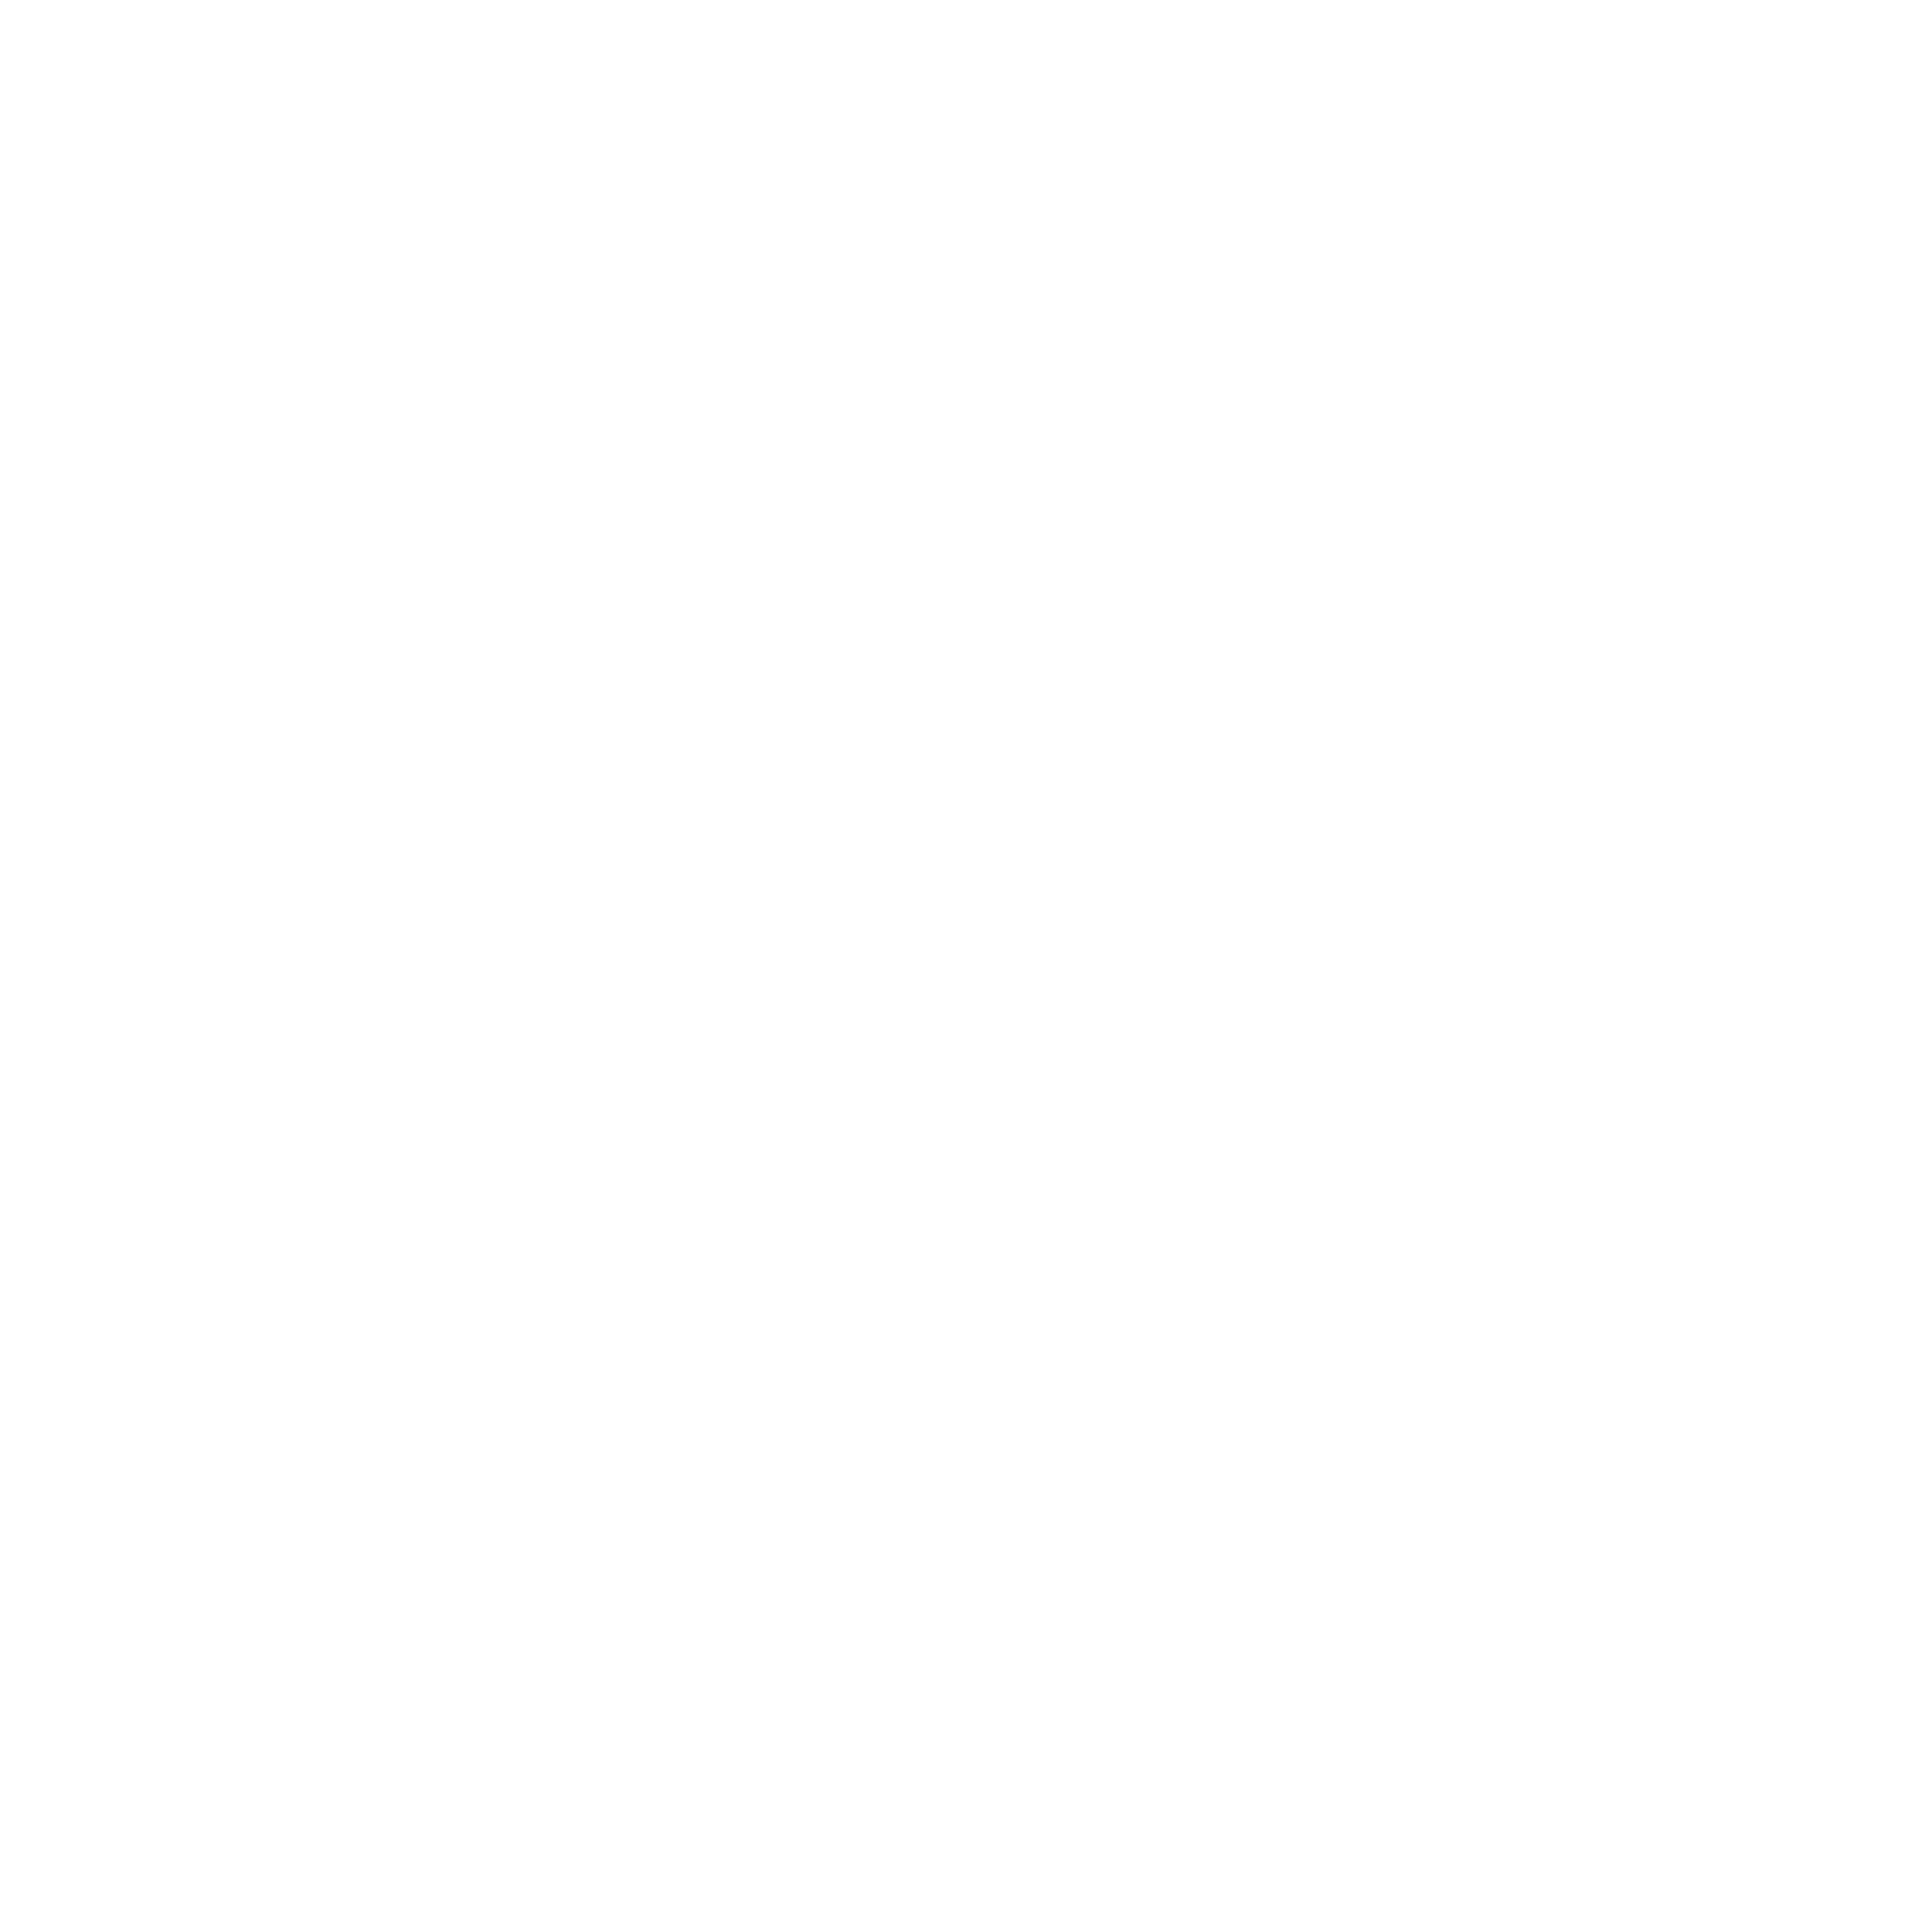 Salt Lake City seal